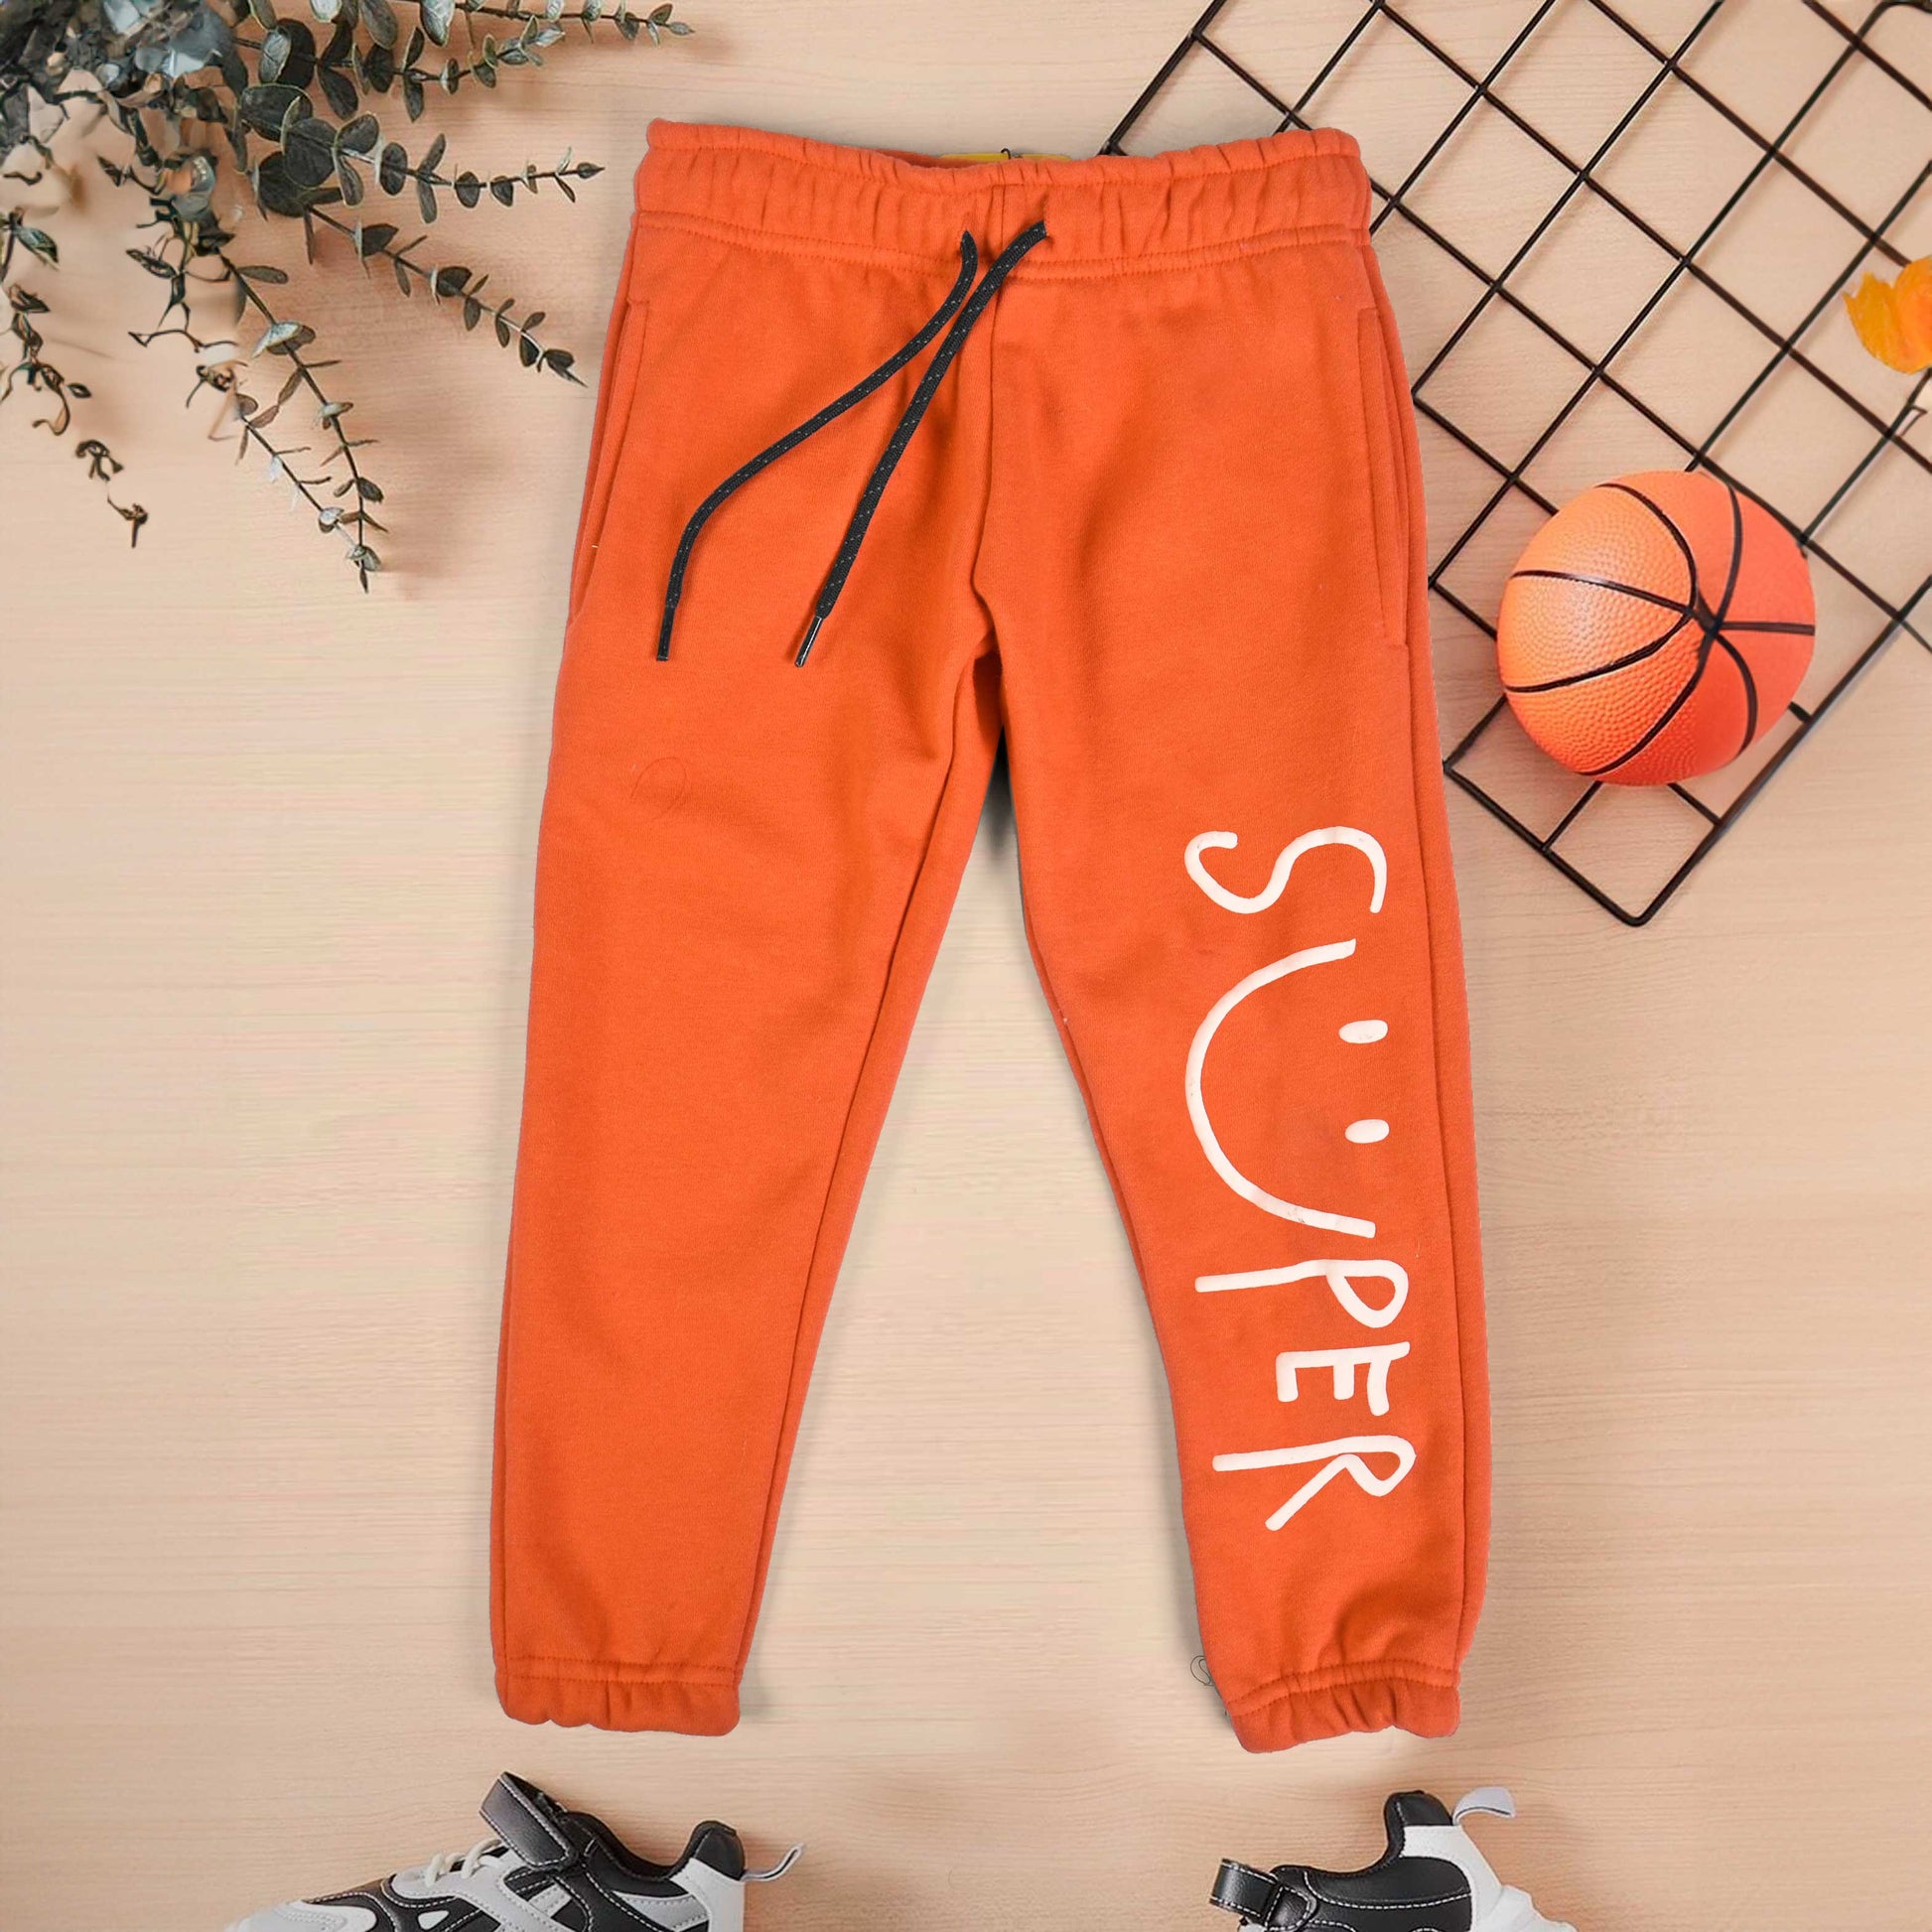 Max 21 Boy's Super Printed Fleece Sweat Pants Boy's Sweat Pants SZK Orange 3-4 Years 